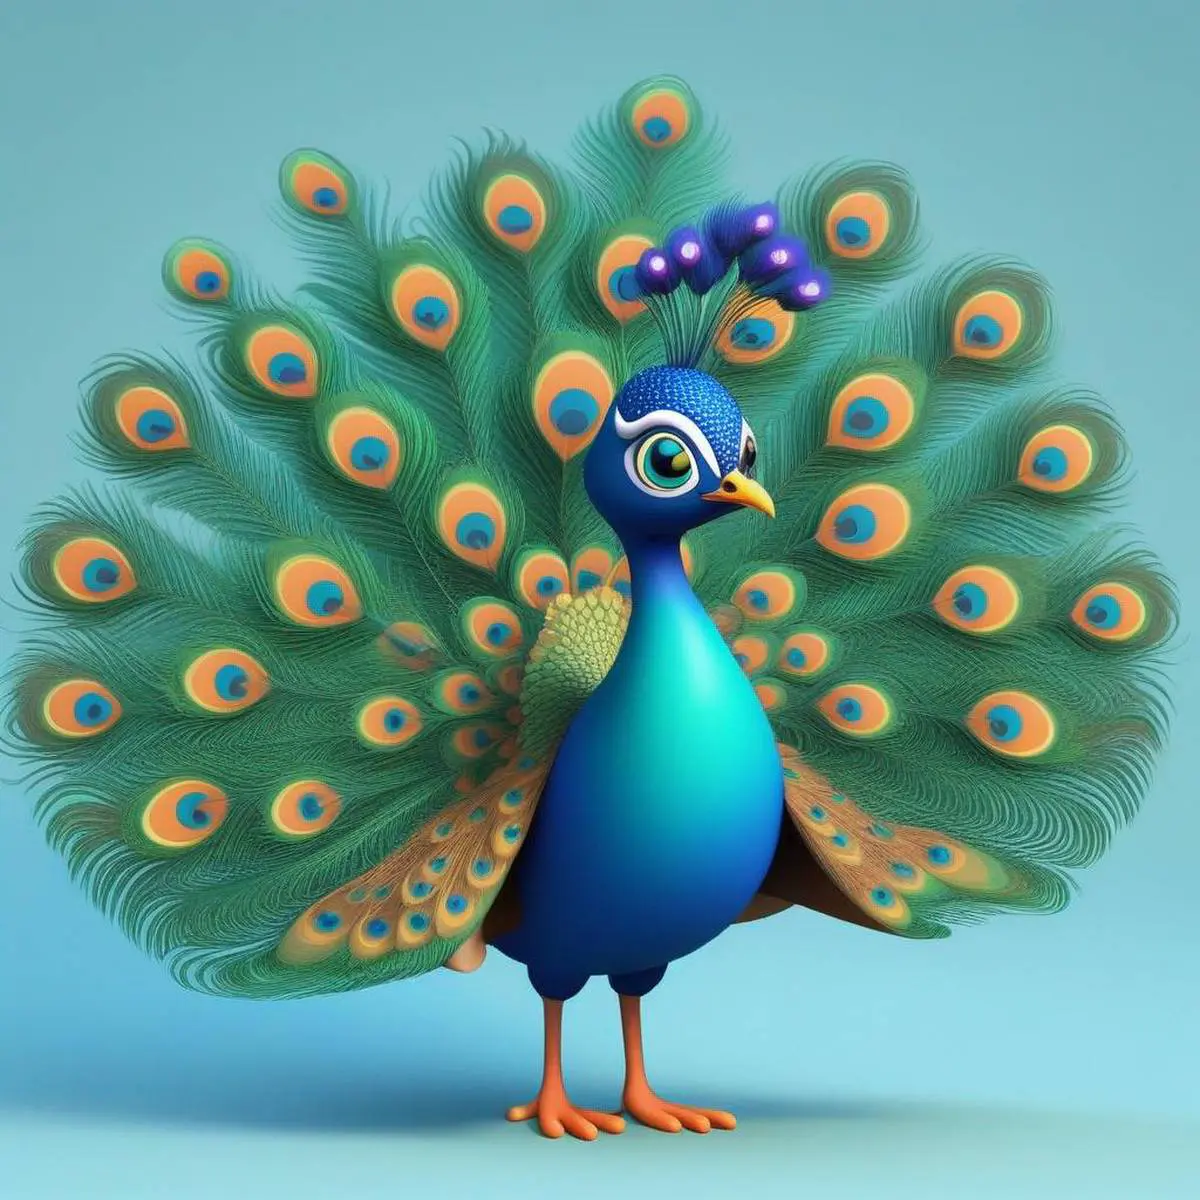 Peacock puns